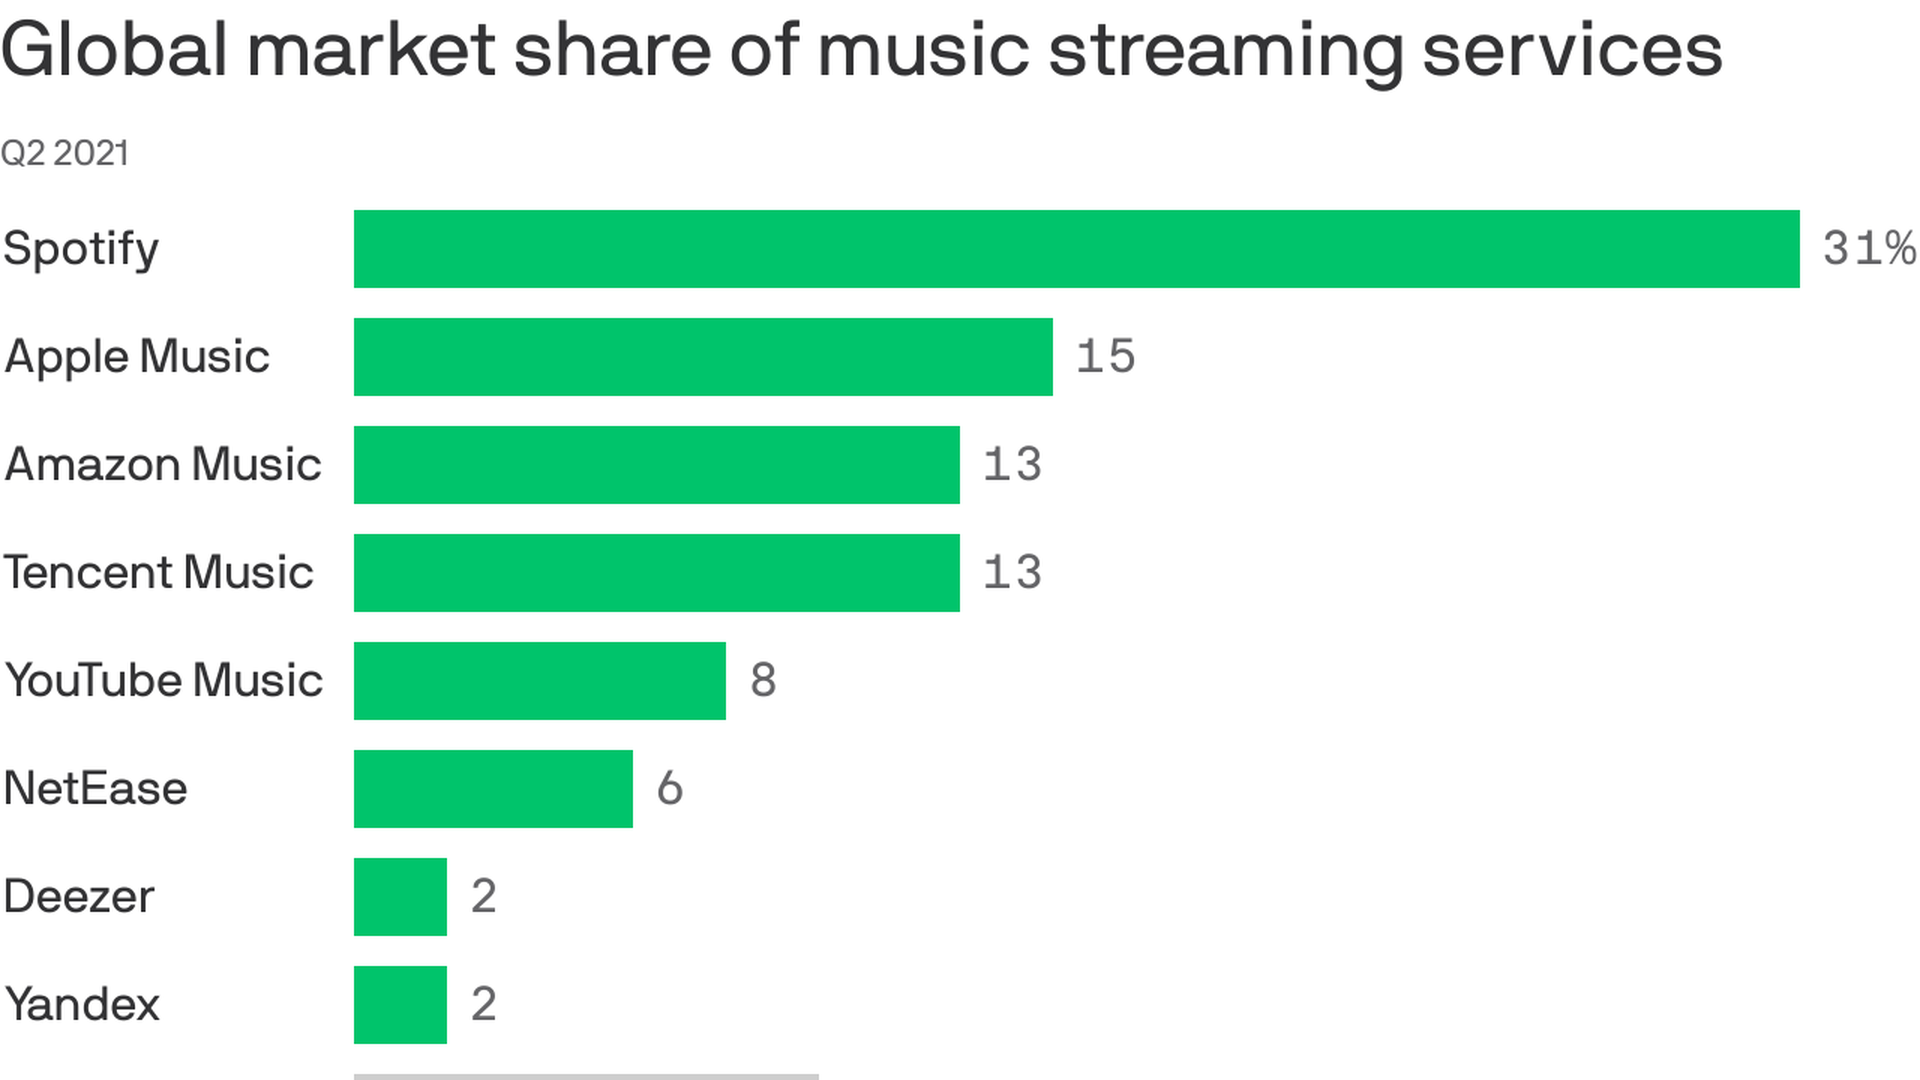 Music subscriber market shares Q2 2021